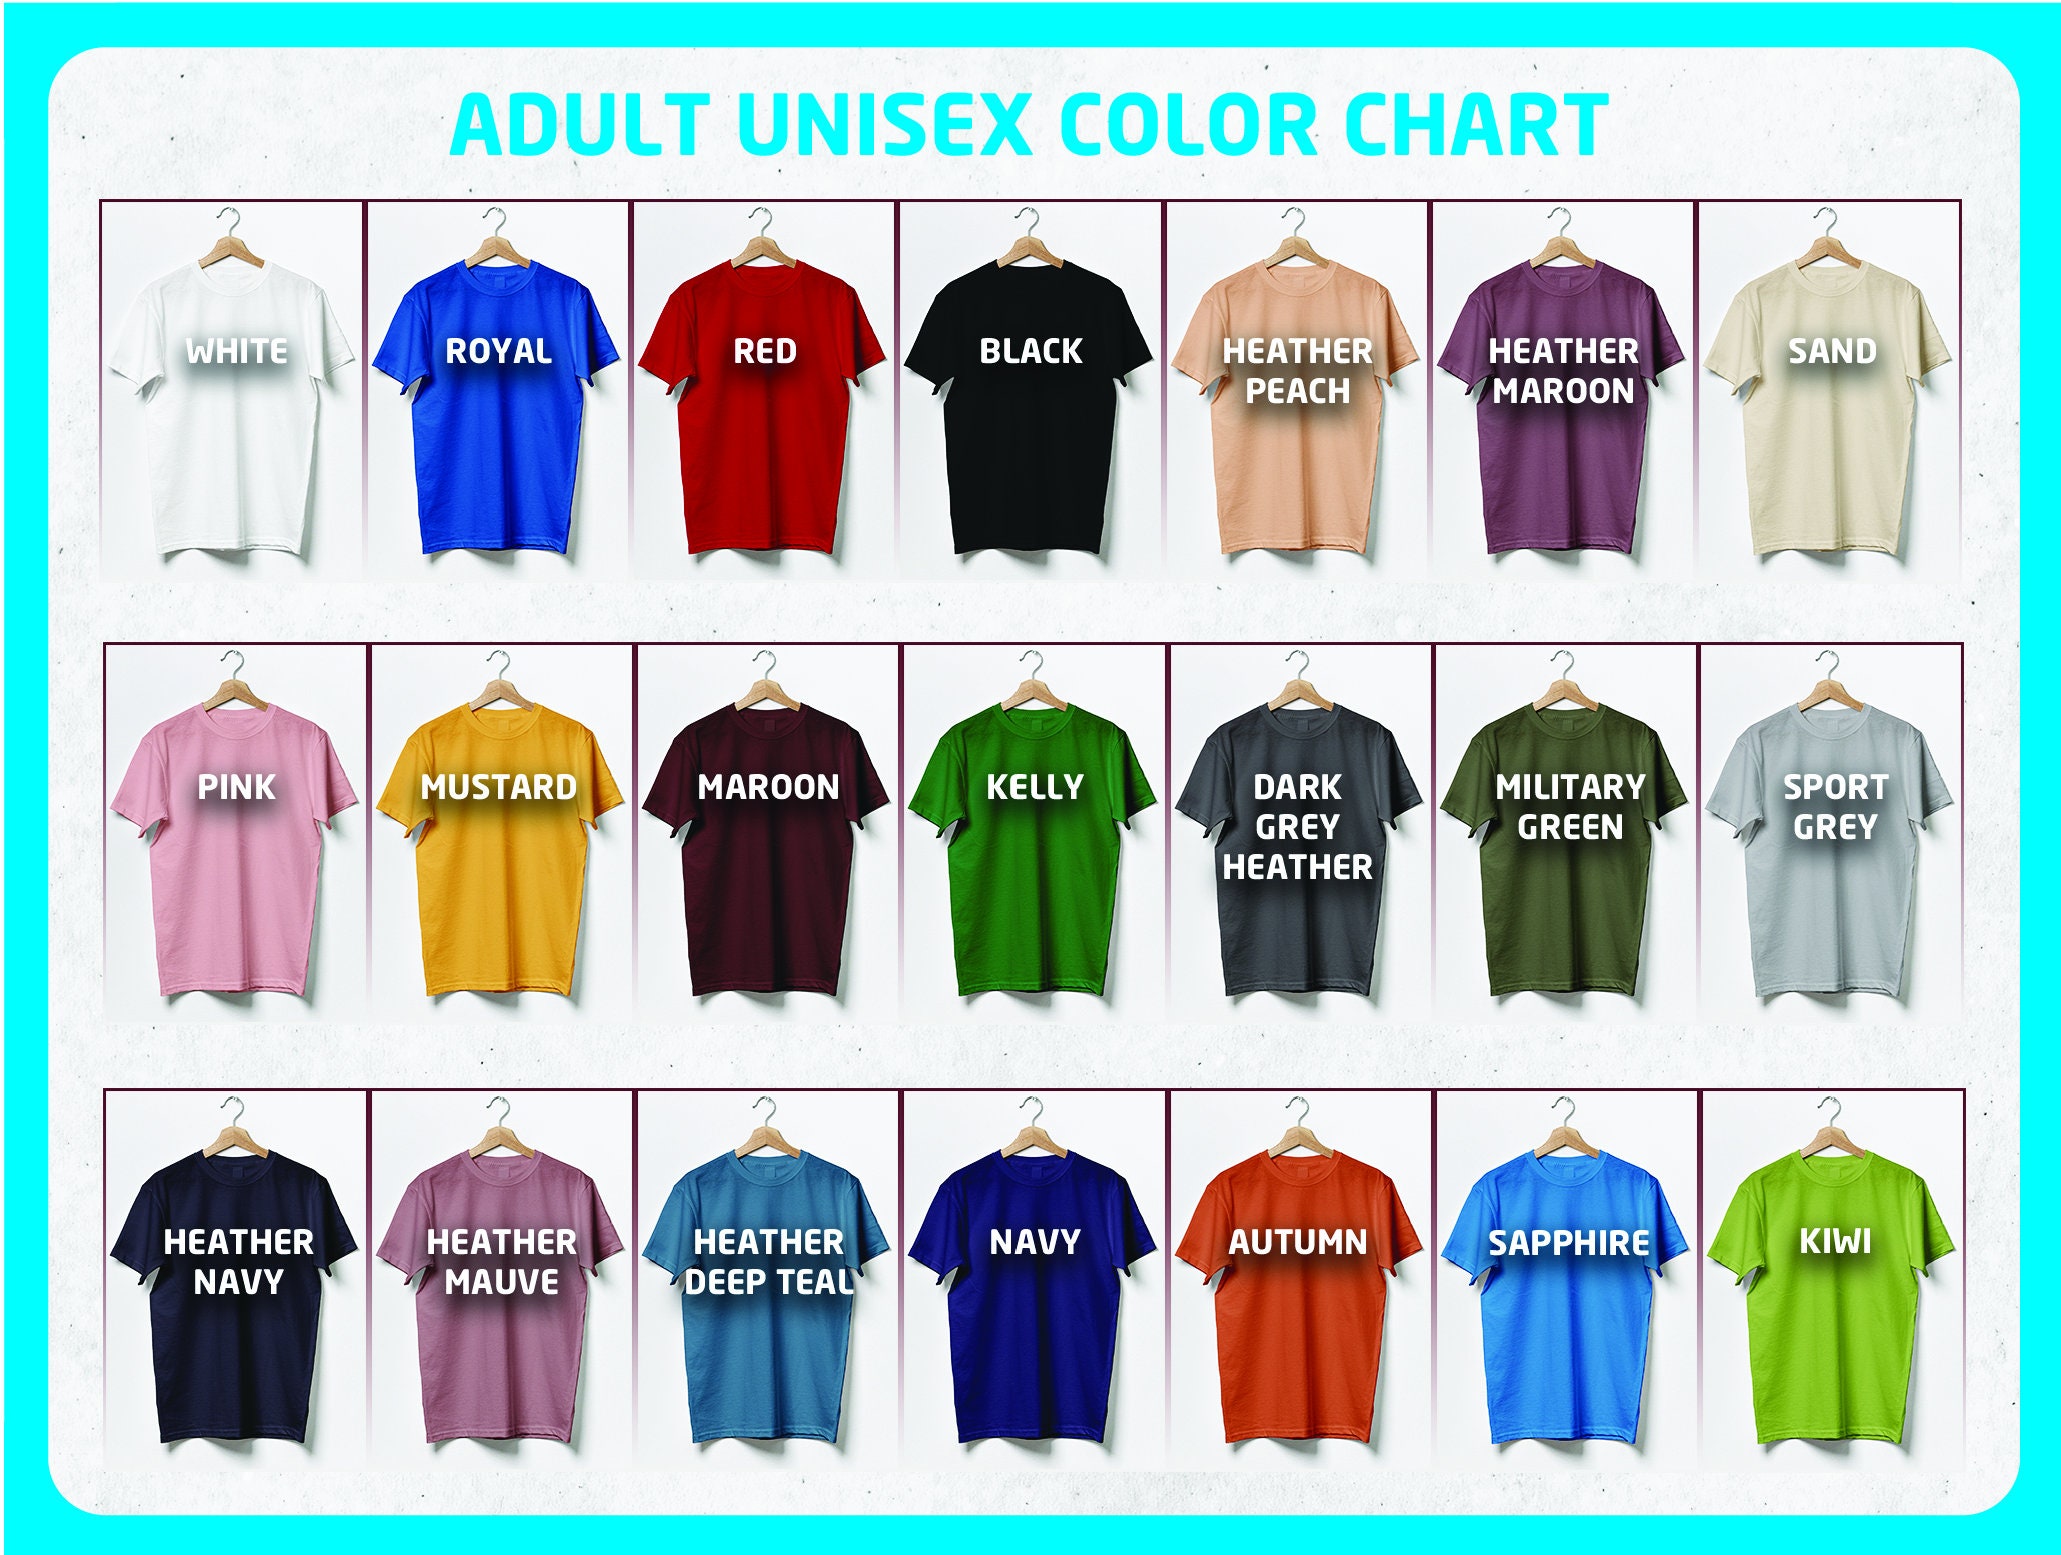 Custom Baseball Jerseys  Full Color Customizable Apparel